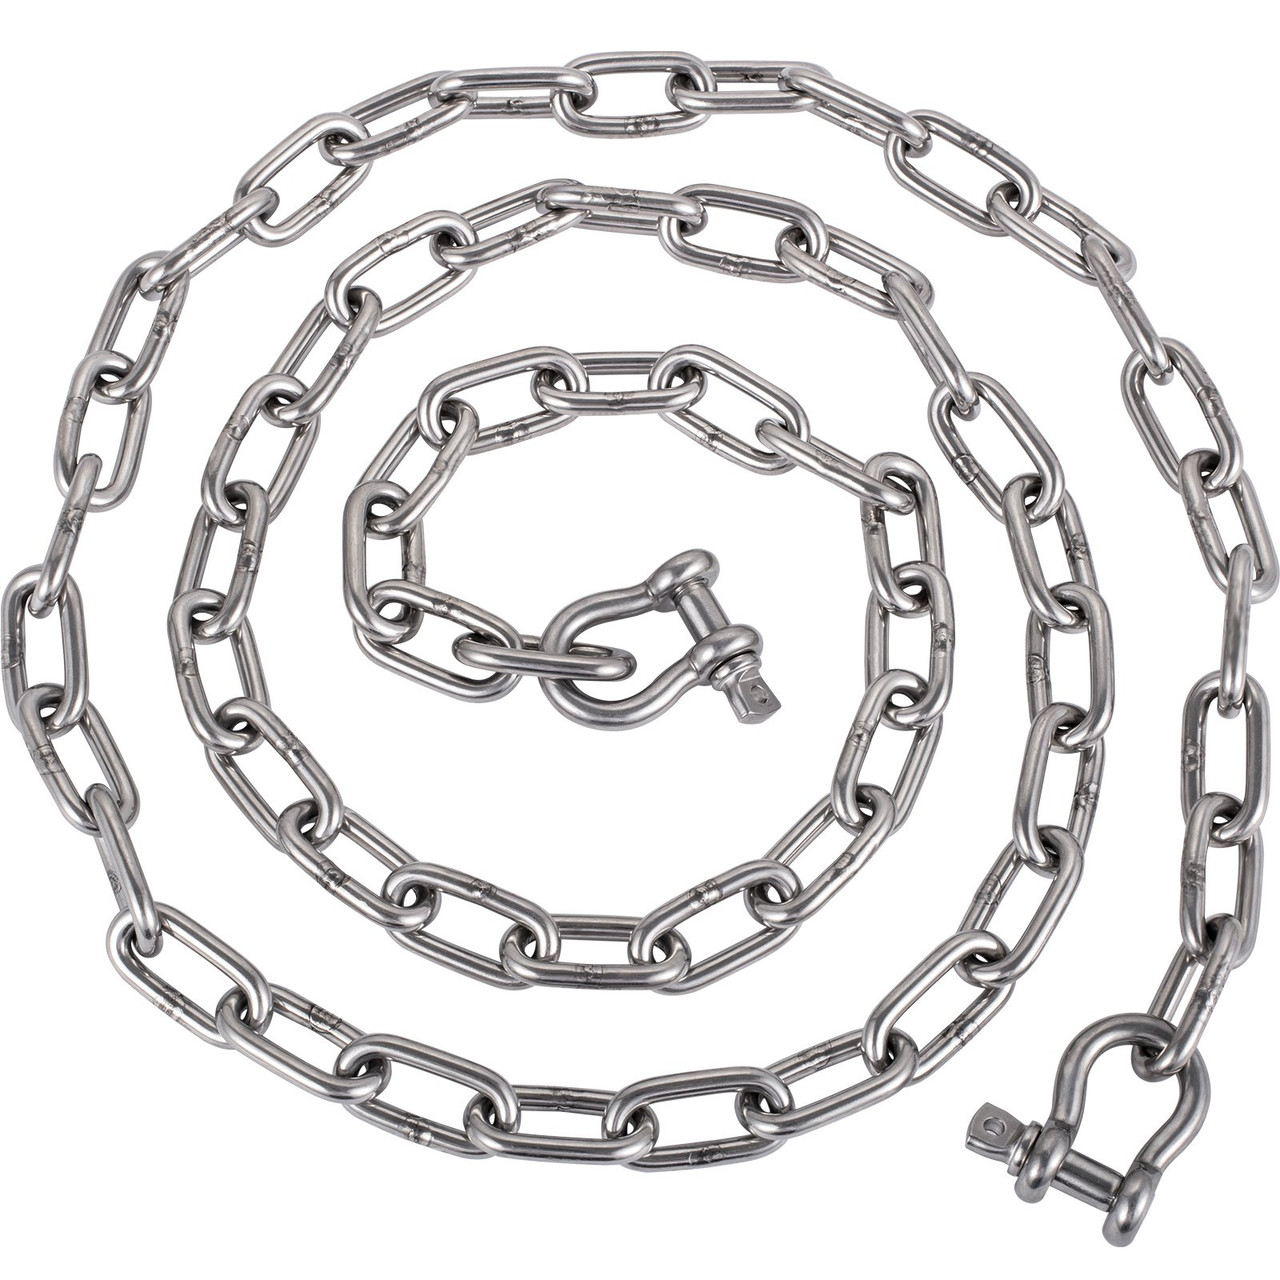 Anchor Chain, 20' x 5/16 316 Stainless Steel Chain, 3/8 Anchor